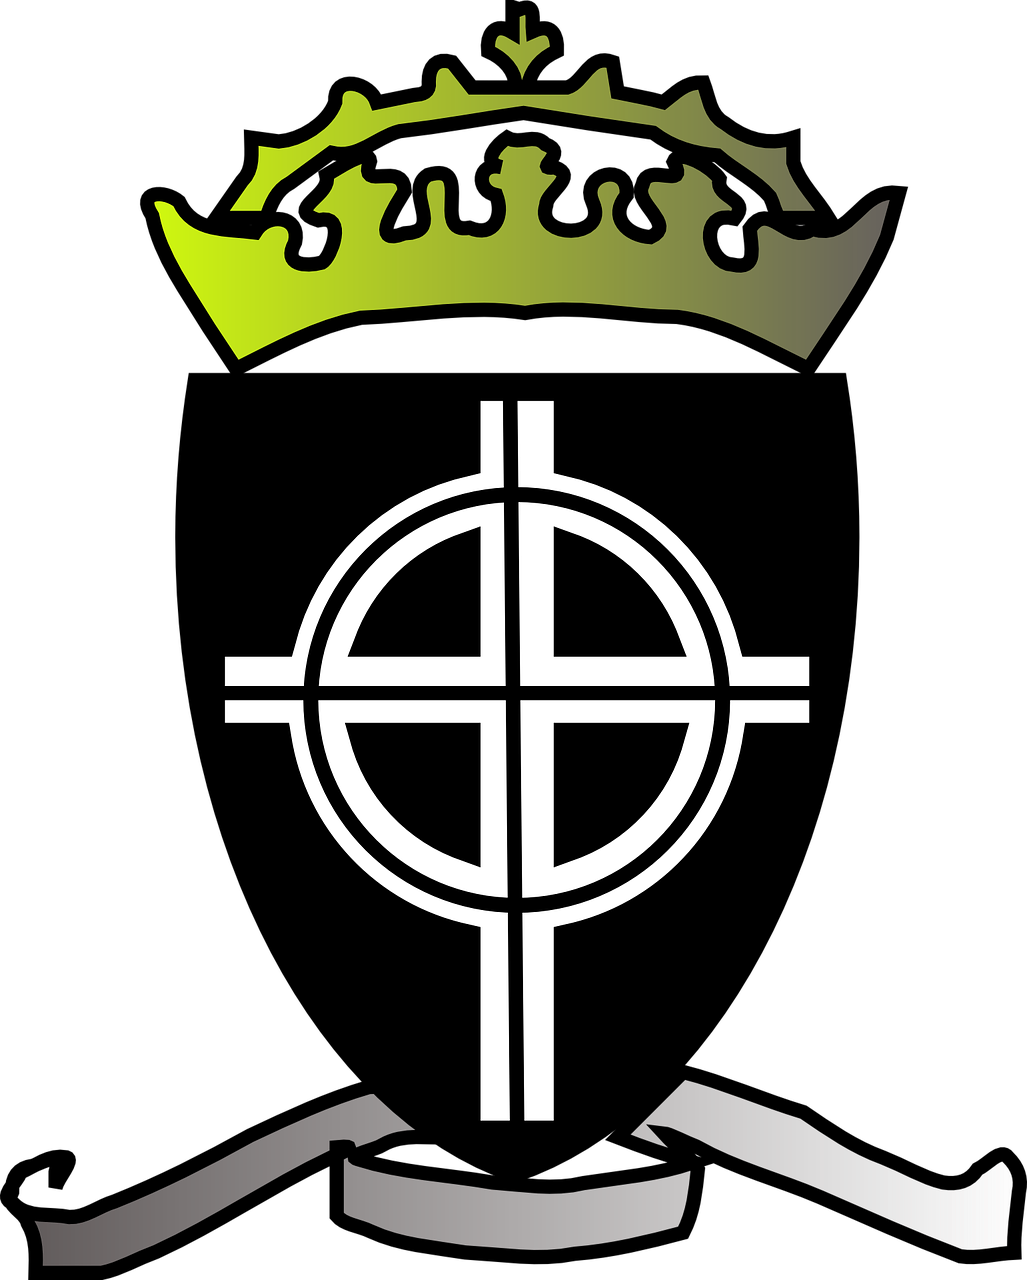 crest coat of arms heraldry free photo